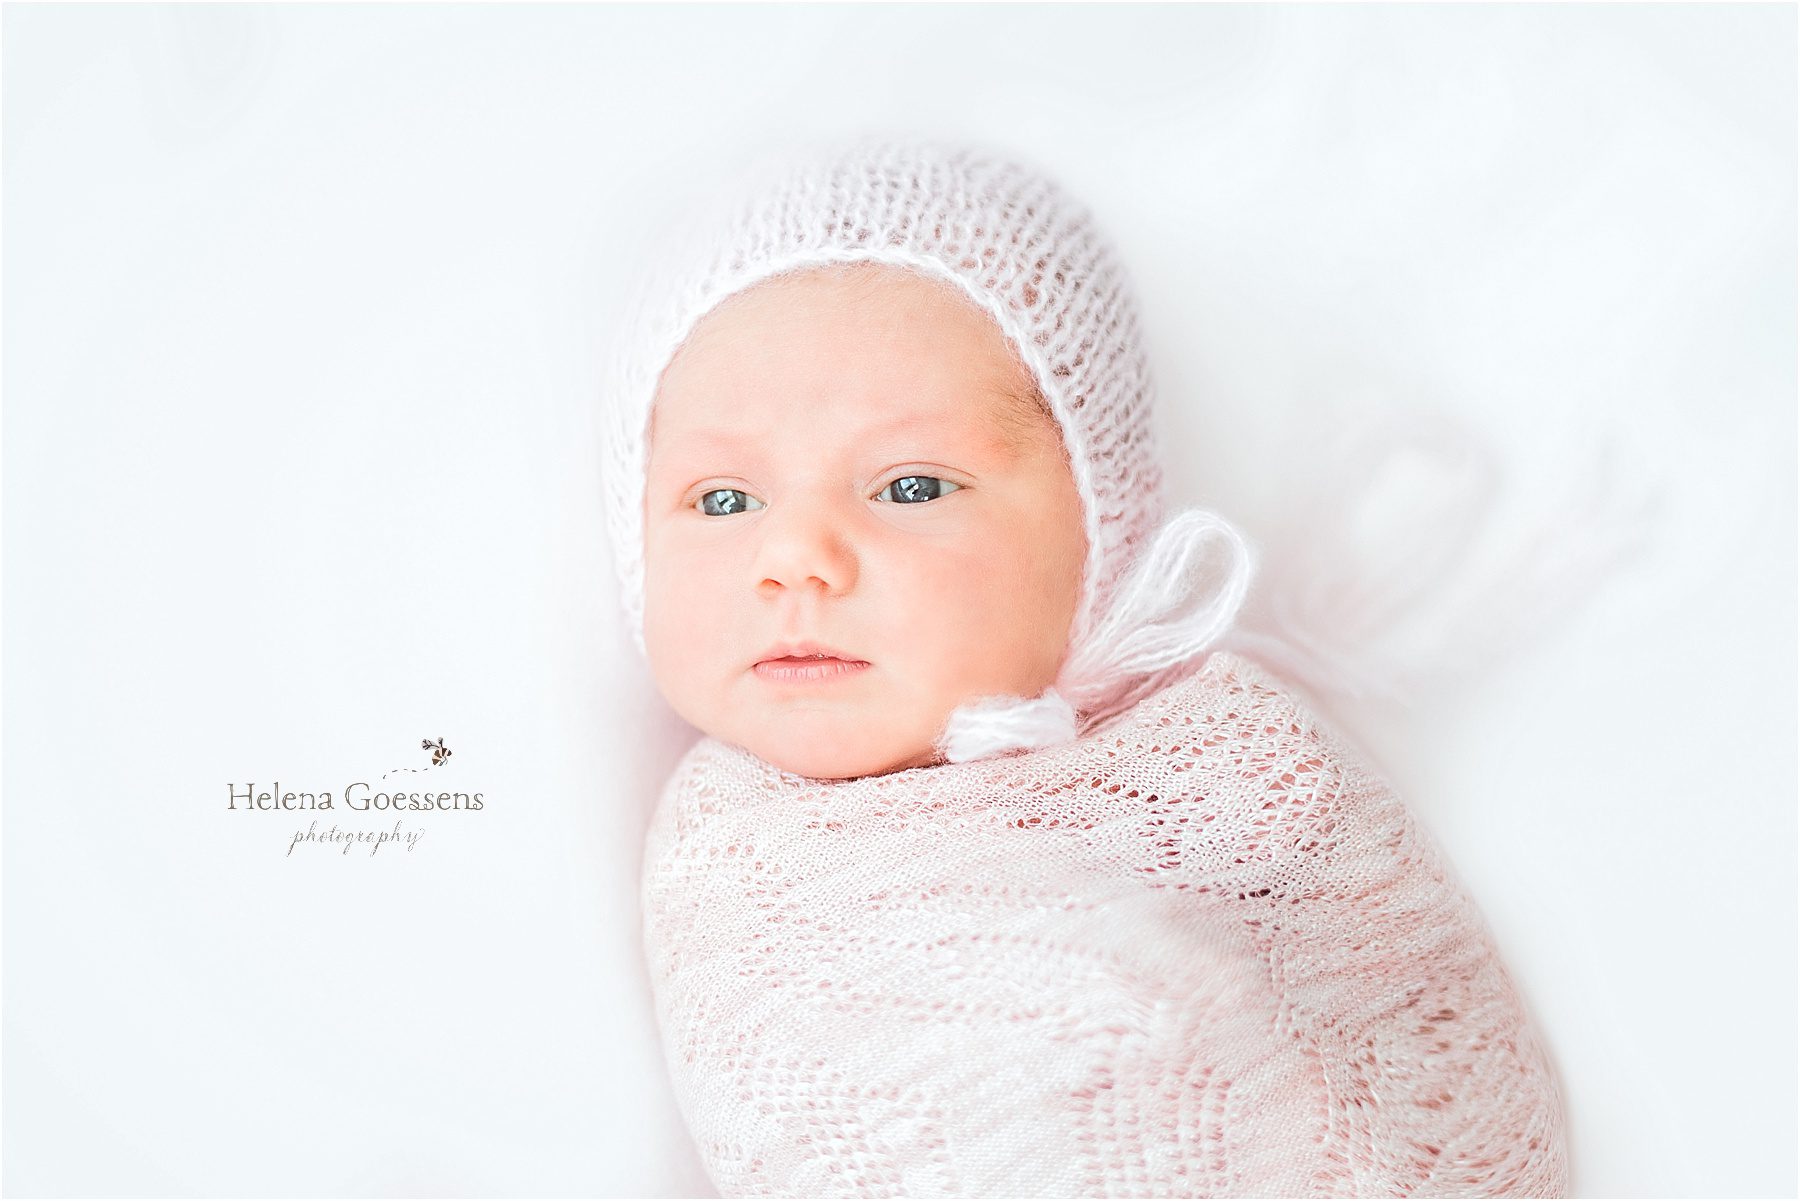 welcome little sis | Boston Newborn Baby Photographer | Helena Goessens Photography